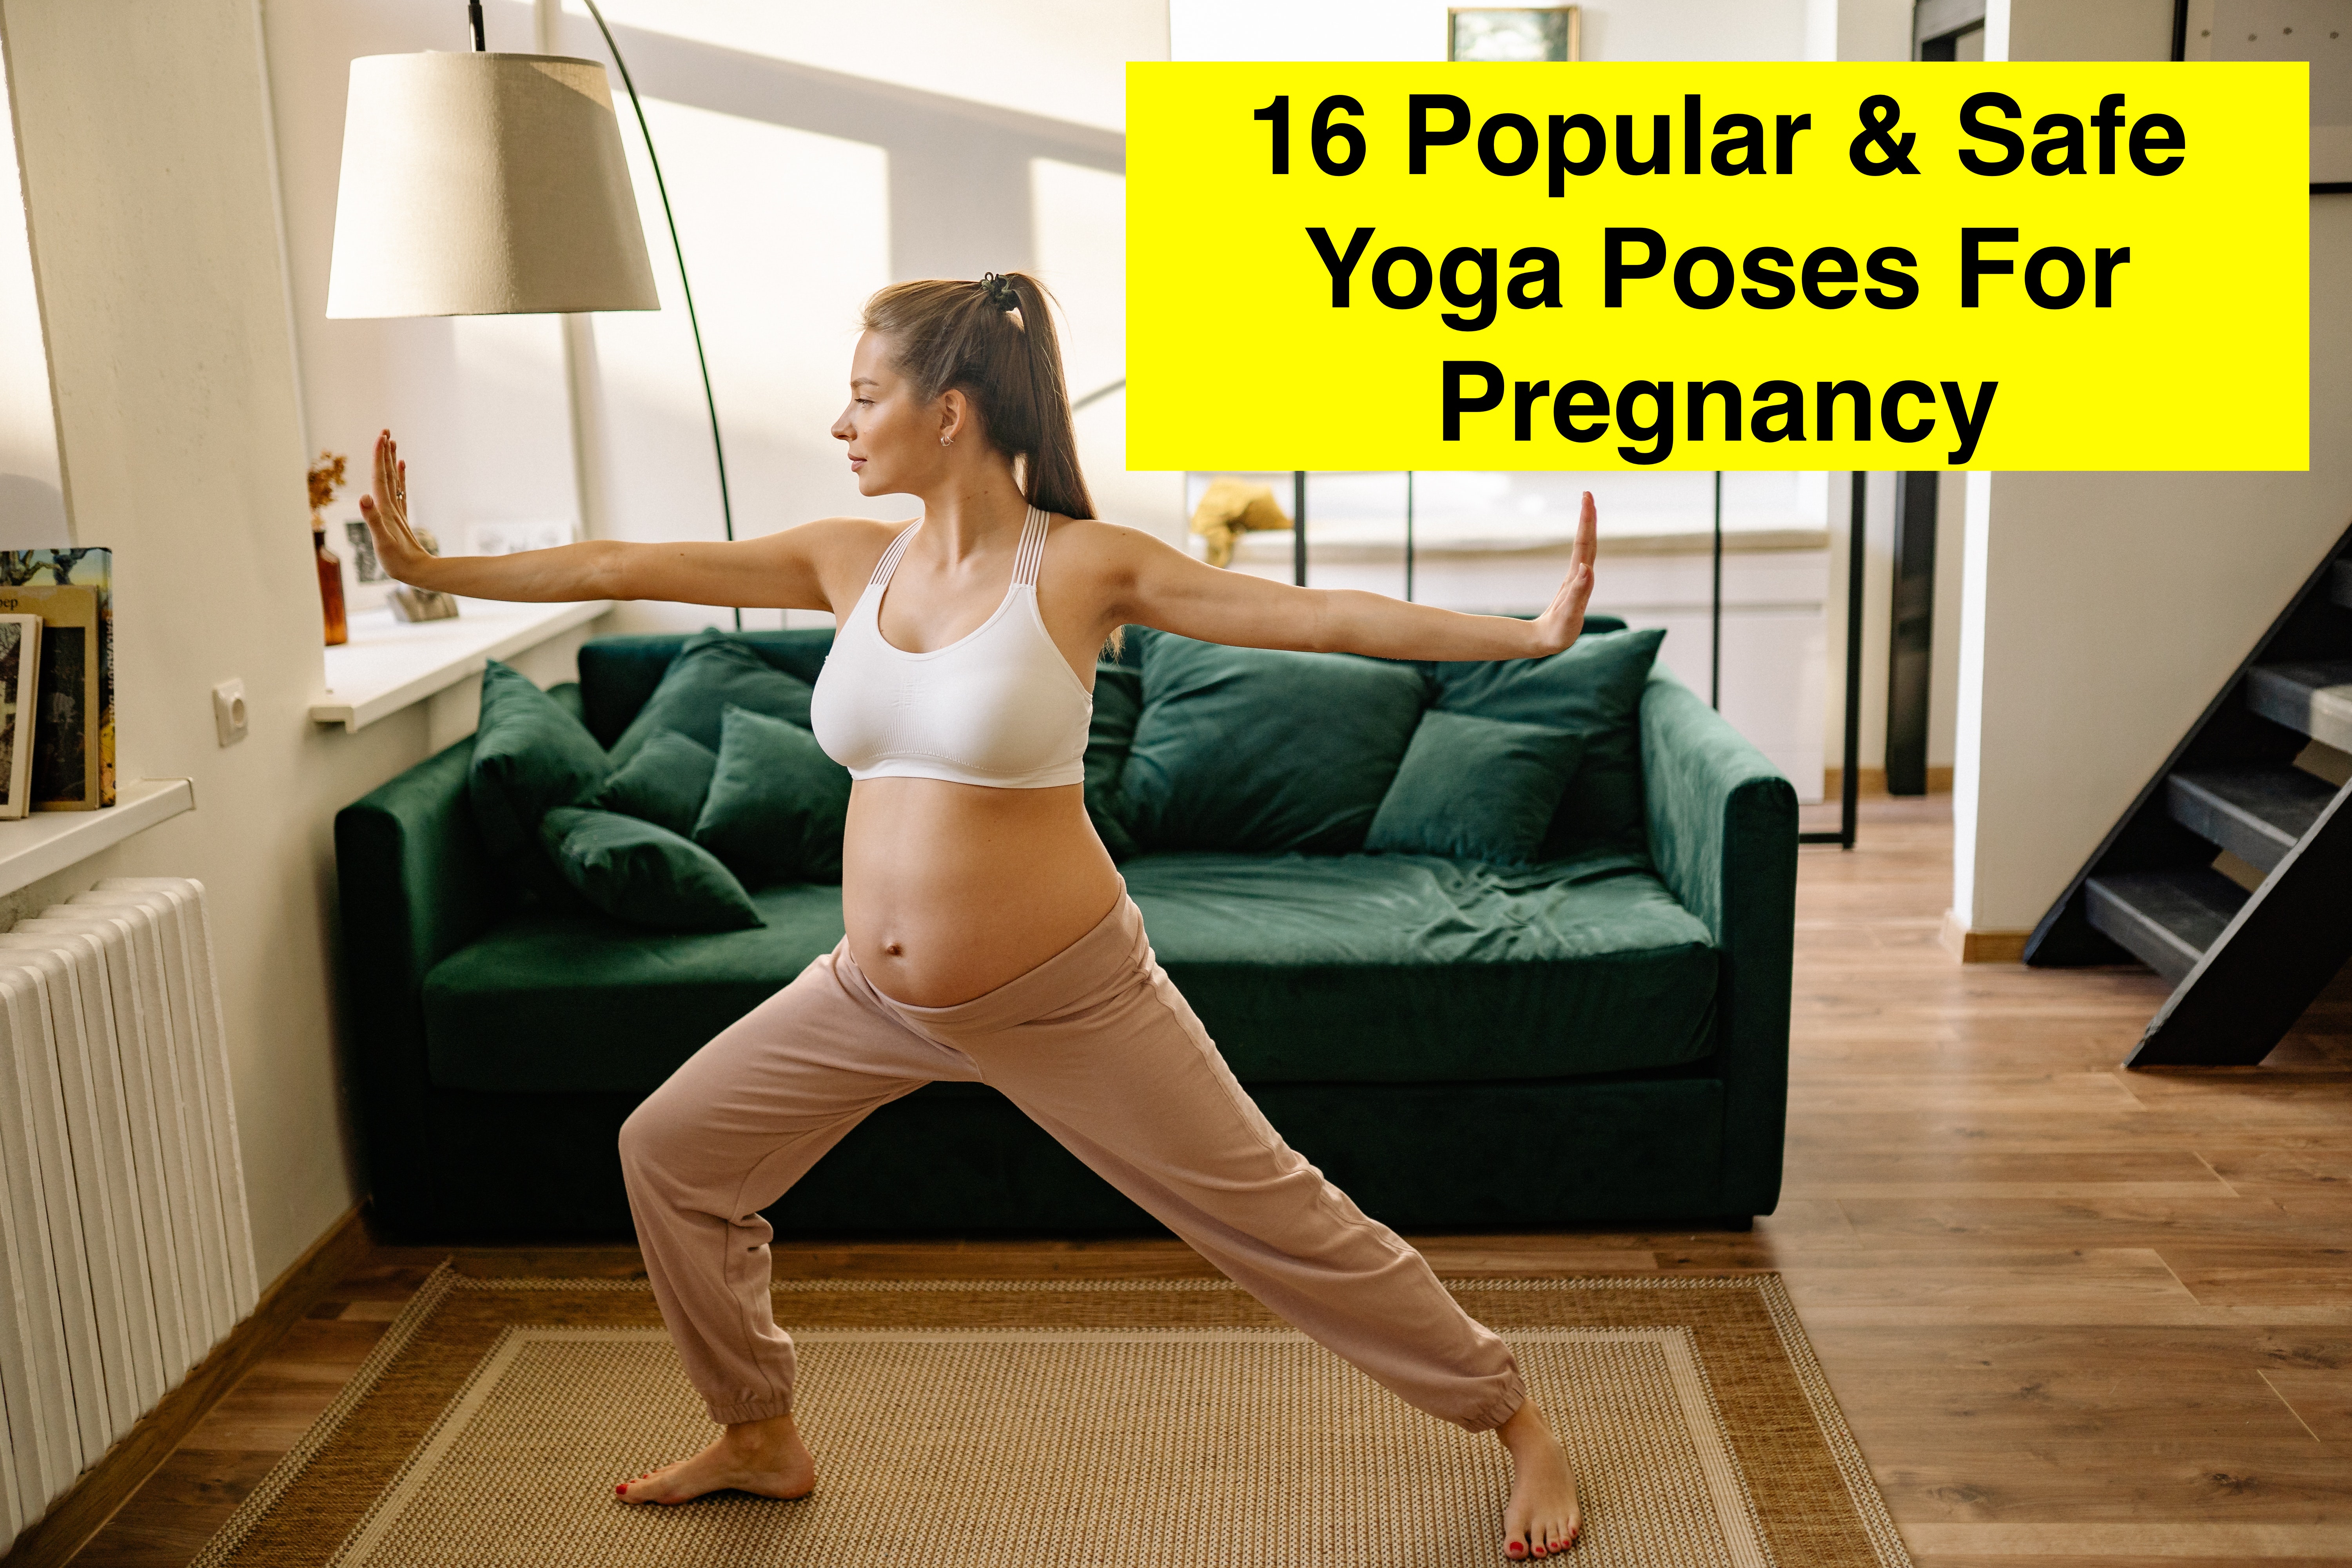 16 Popular & Safe Yoga Poses For Pregnancy